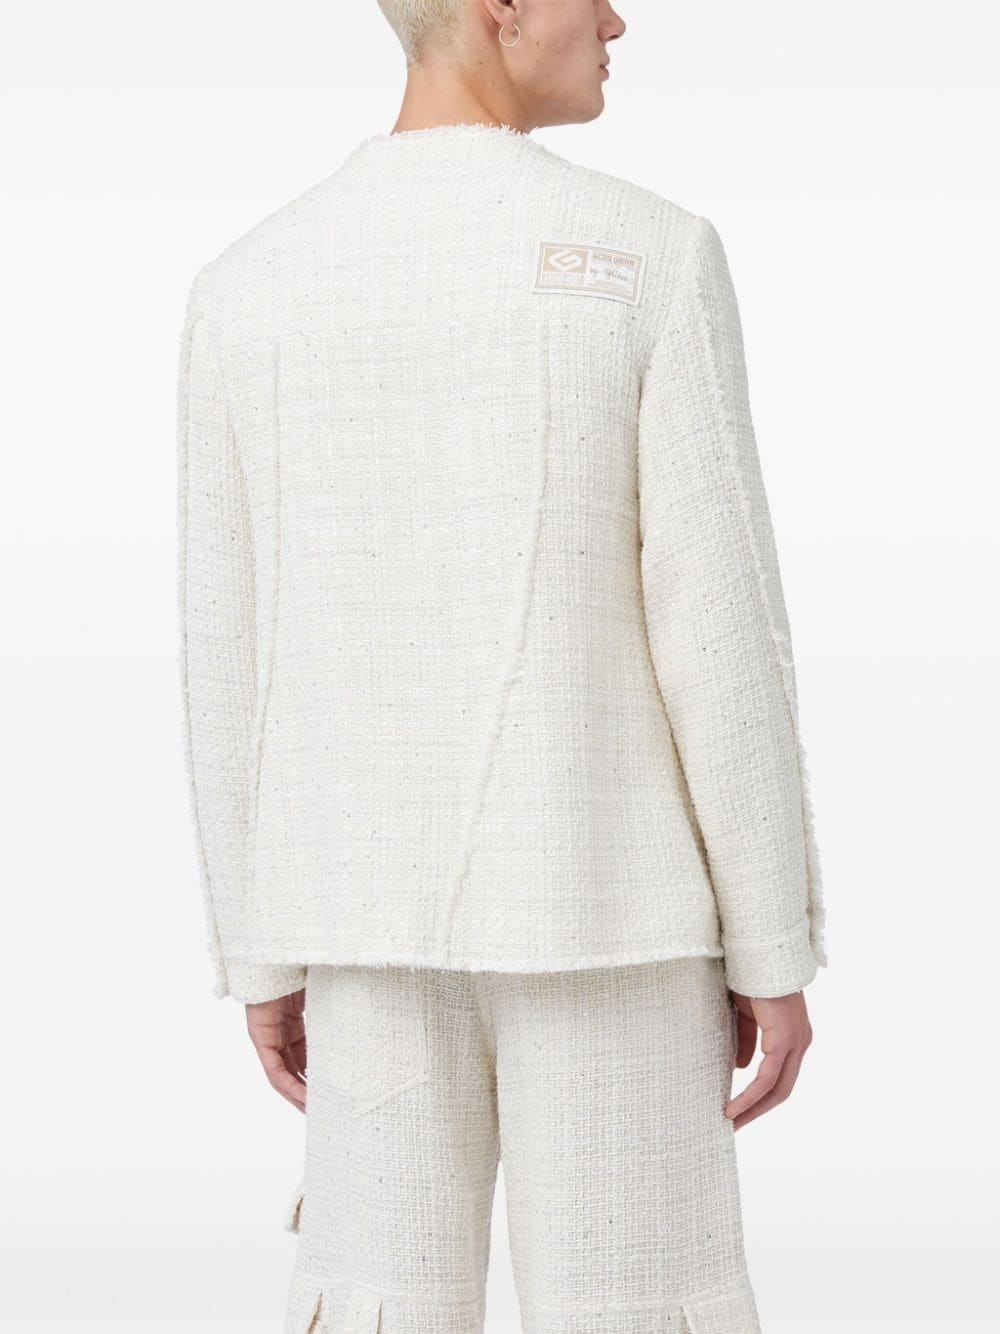 sequin-embellished tweed jacket - 5